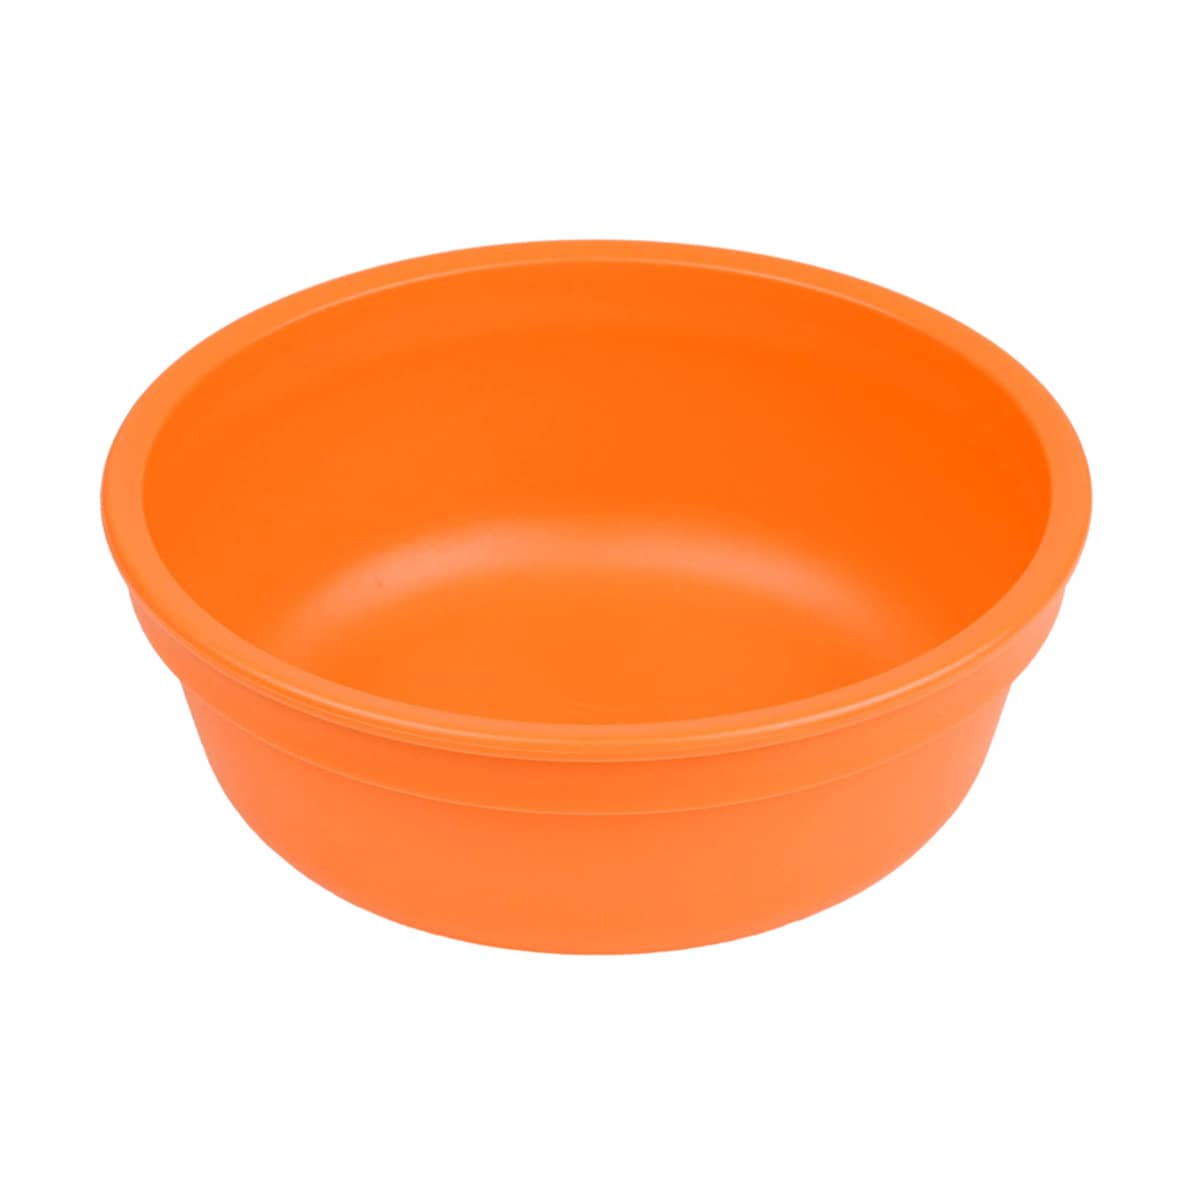 Re-Play Recycled Bowl - Orange